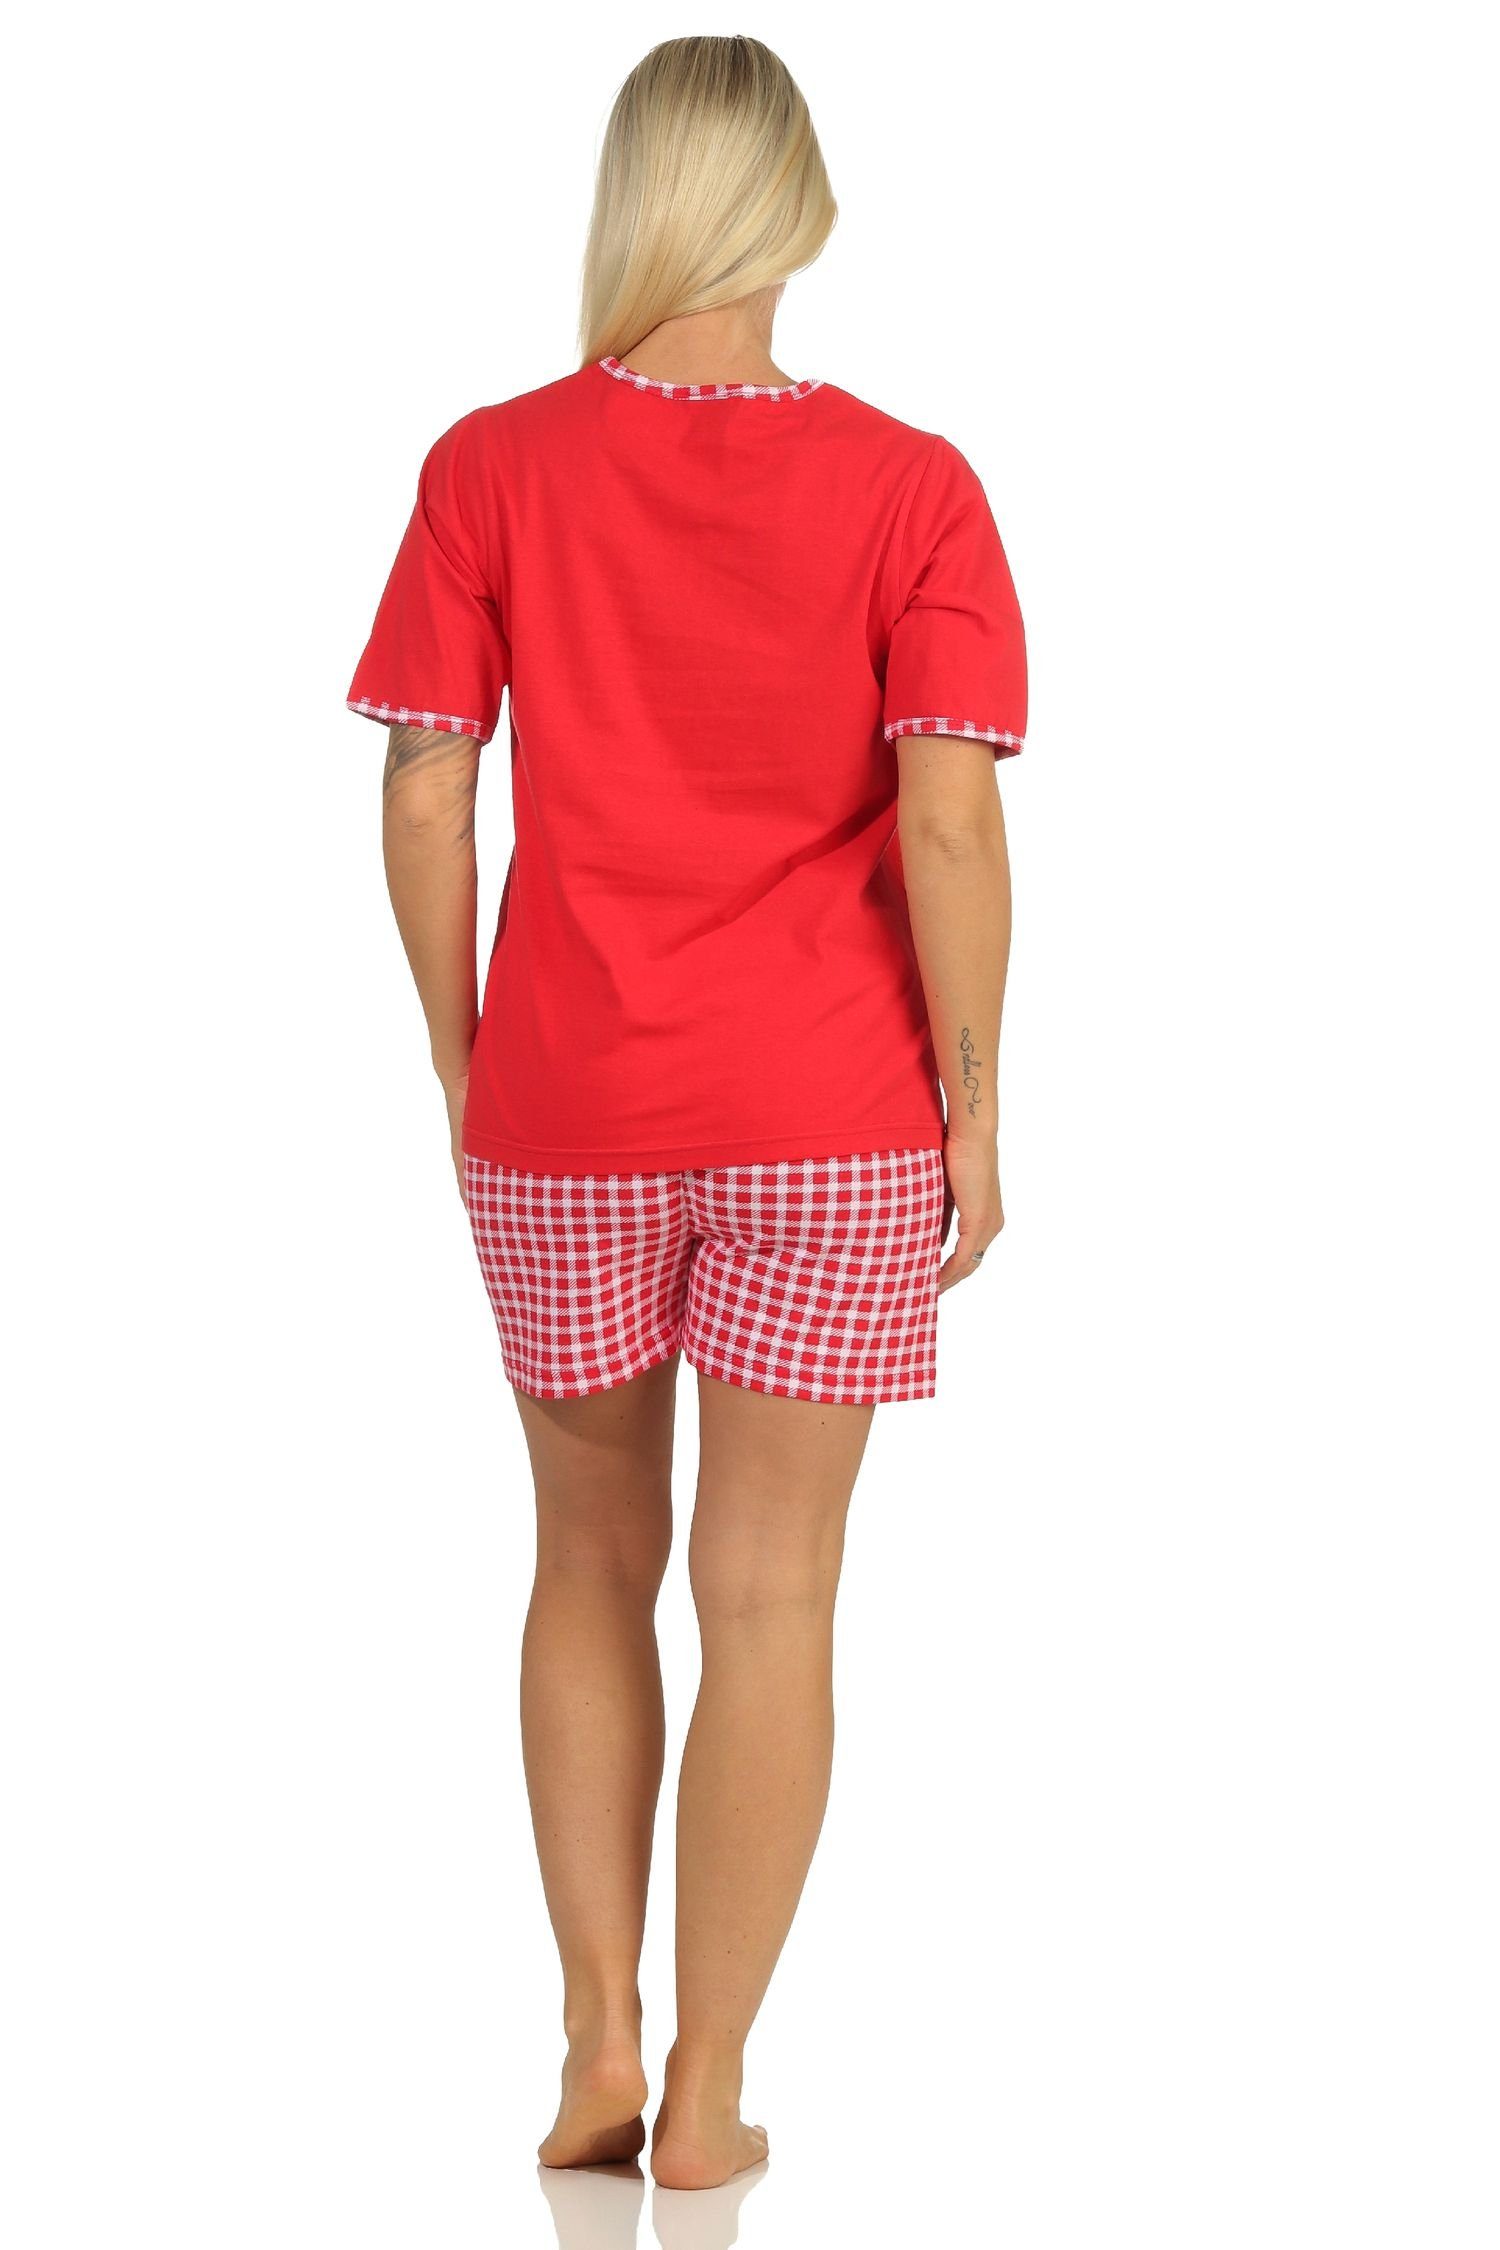 Schlafanzug Damen Shorty Pyjama süßem Normann - kurzarm 66334 rot Katzen-Motiv mit